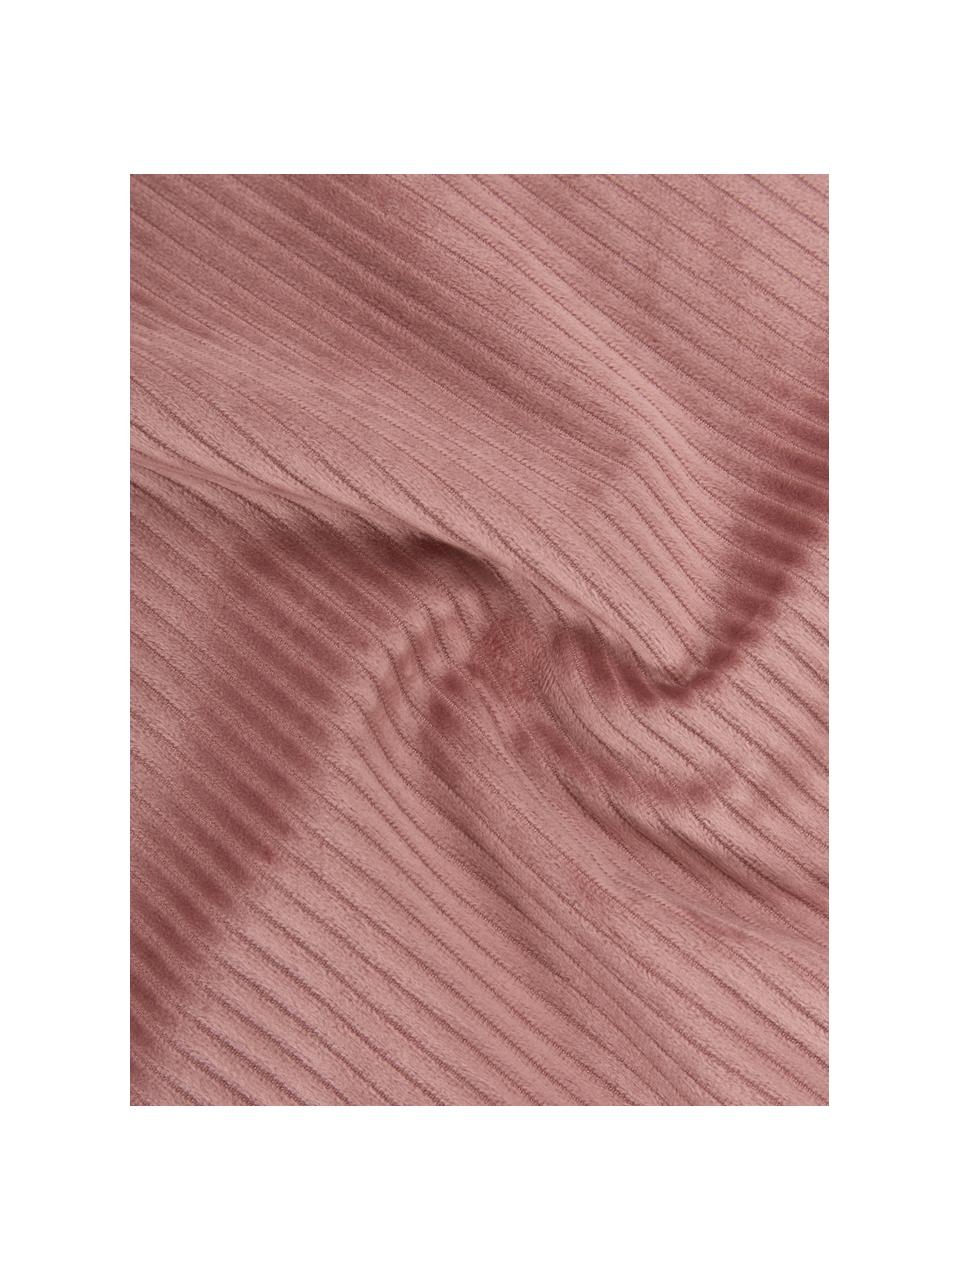 Cord-Bettwäsche Cosy Corduroy in Altrosa, Vorderseite: Cord (100% Polyester), Rückseite: 100% Baumwolle, Altrosa, 135 x 200 cm + 1 Kissen 80 x 80 cm